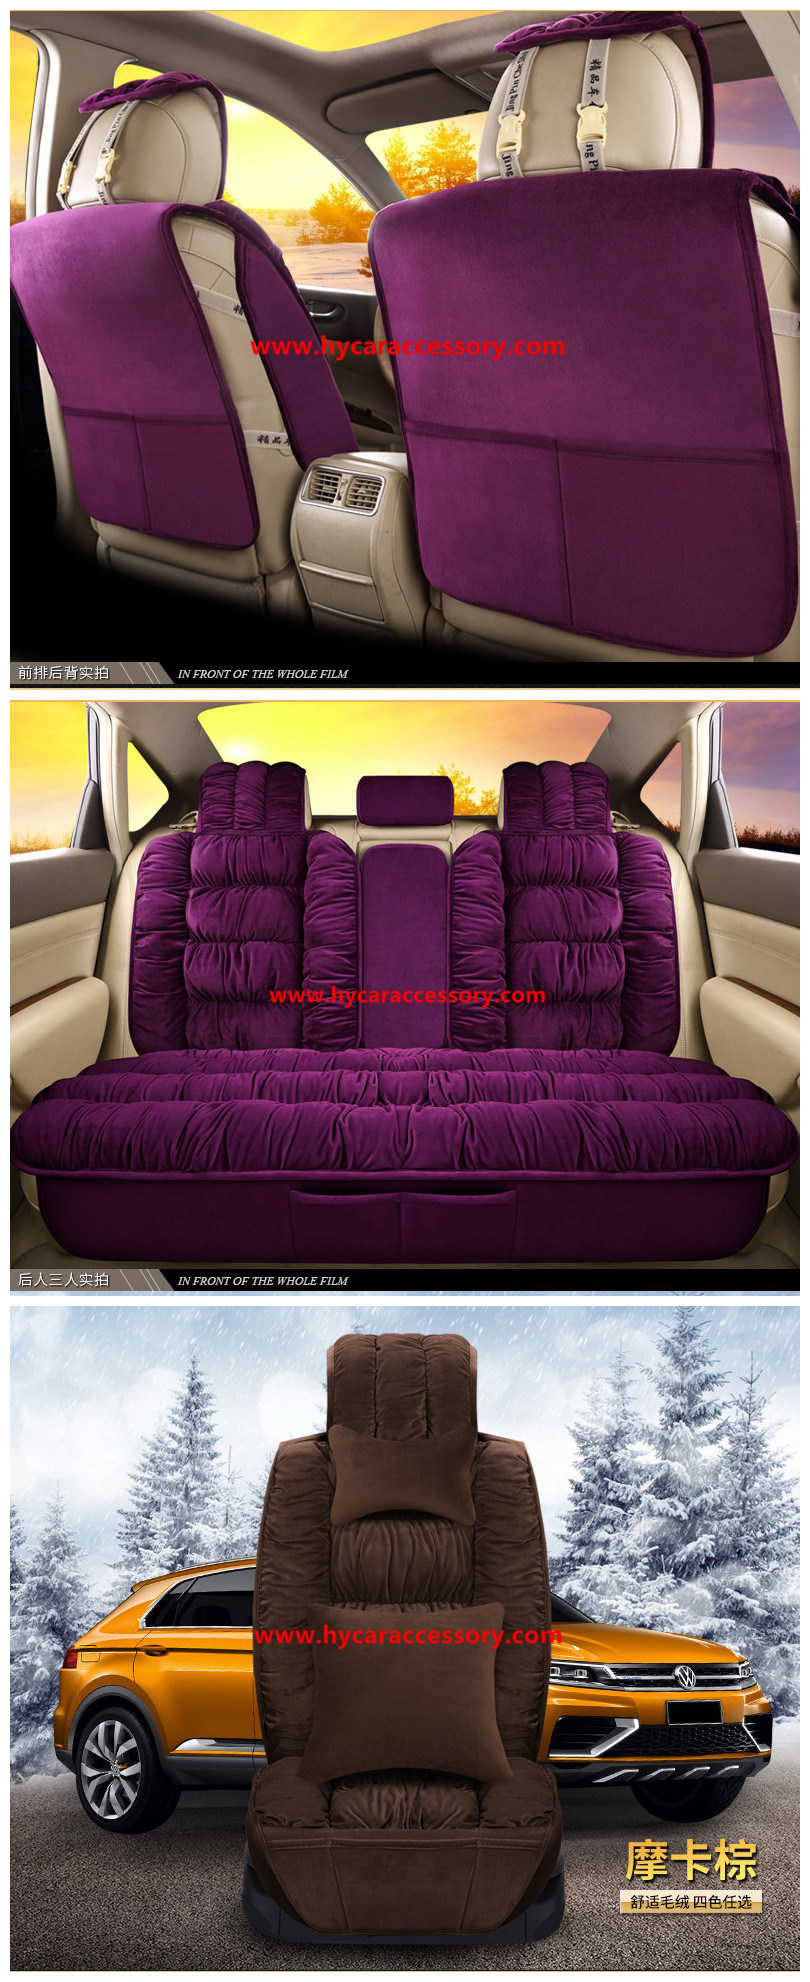 https://jororwxhlkjqlp5p.leadongcdn.com/cloud/llBpkKpqlrSRpiqolkmlip/Car-Accessories-Car-Decoration-Cushion-Universal-Beige-Down-Cotton-Thick-Warm-Soft-Plush-Auto-Car-Se.jpg